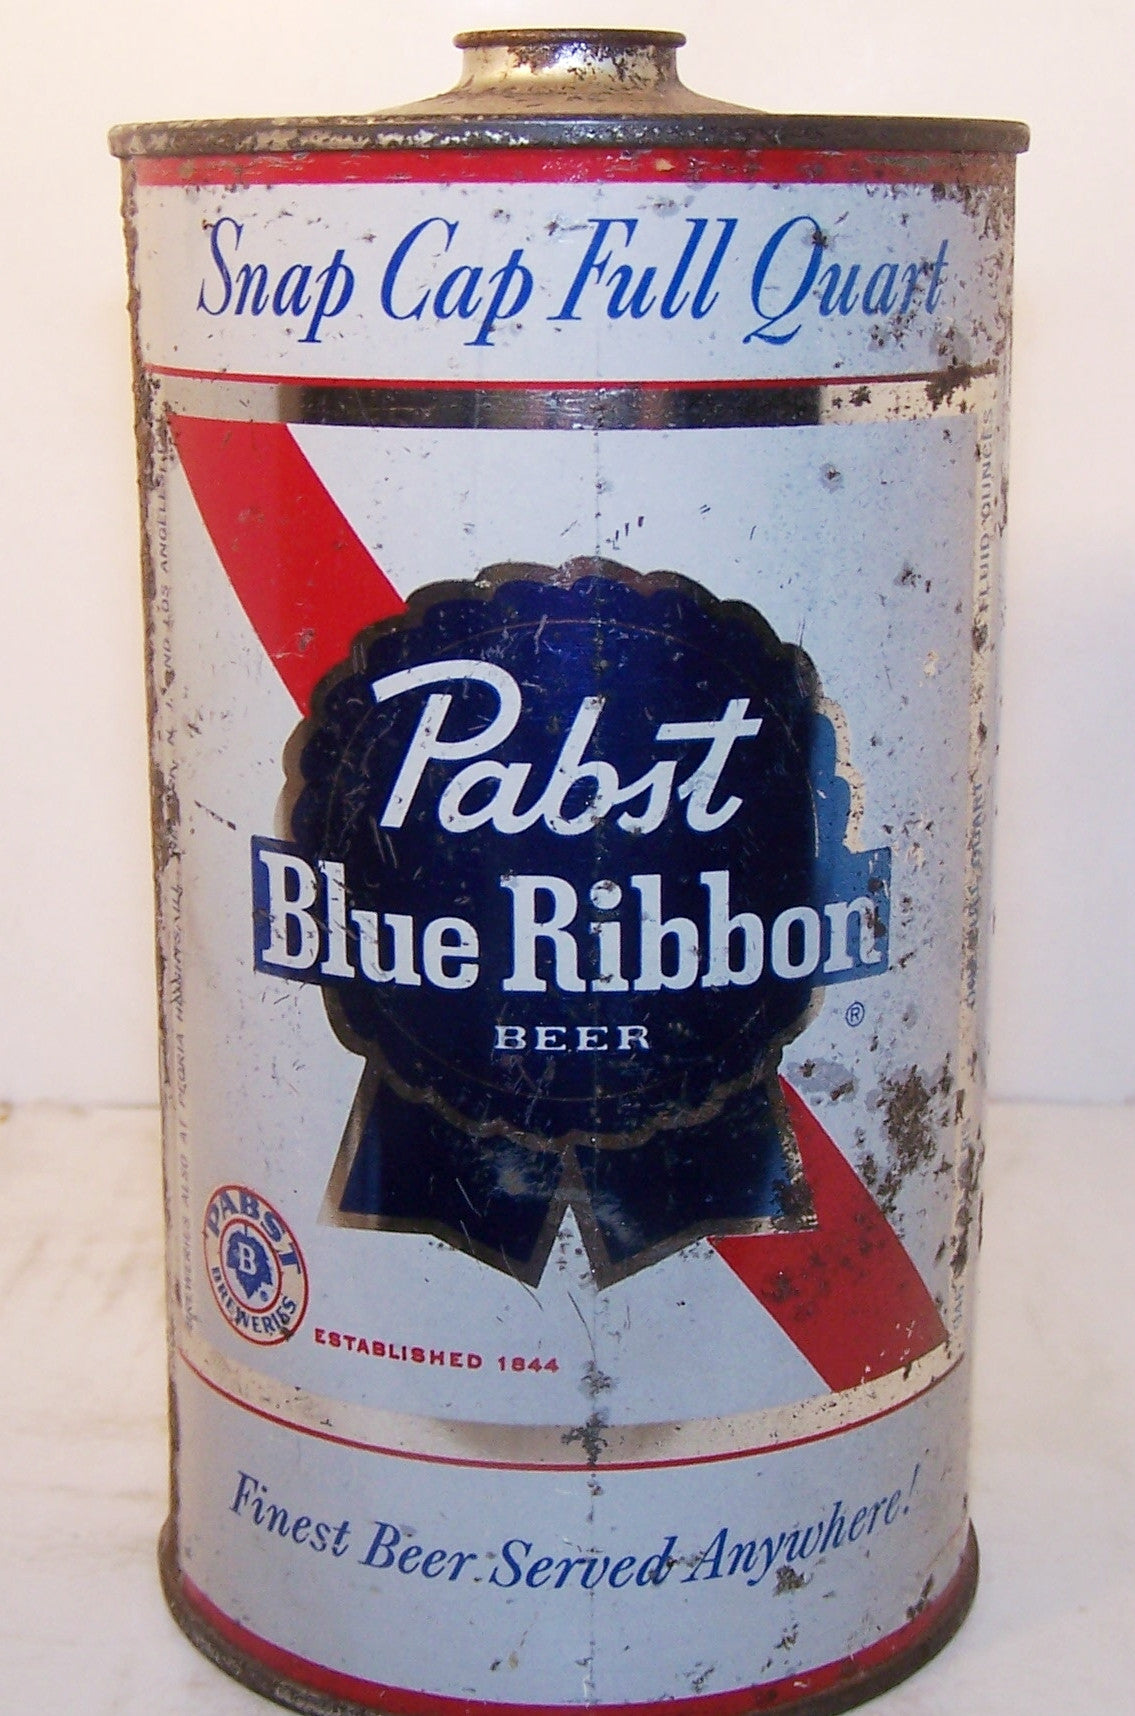 Pabst Blue Ribbon Beer, USBC 217-6, Grade 2 Sold on 2/28/15